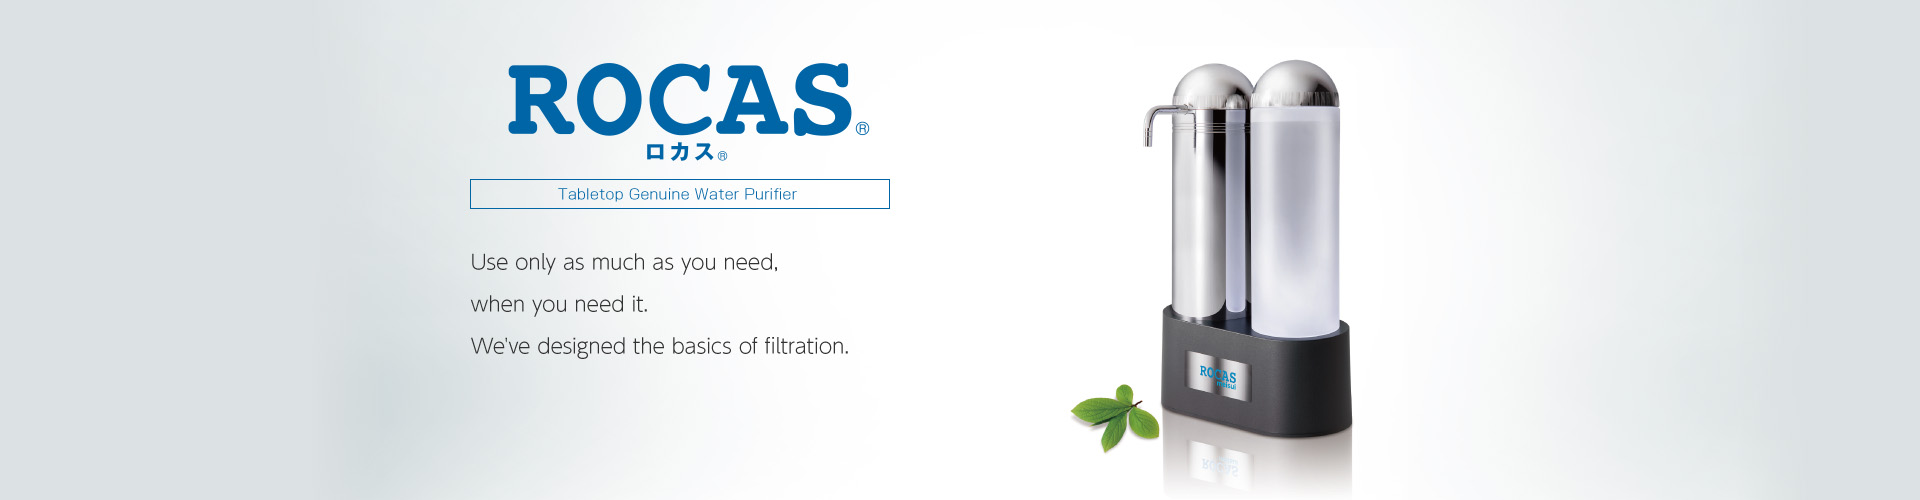 ROCAS® Tabletop Genuine Water Purifier